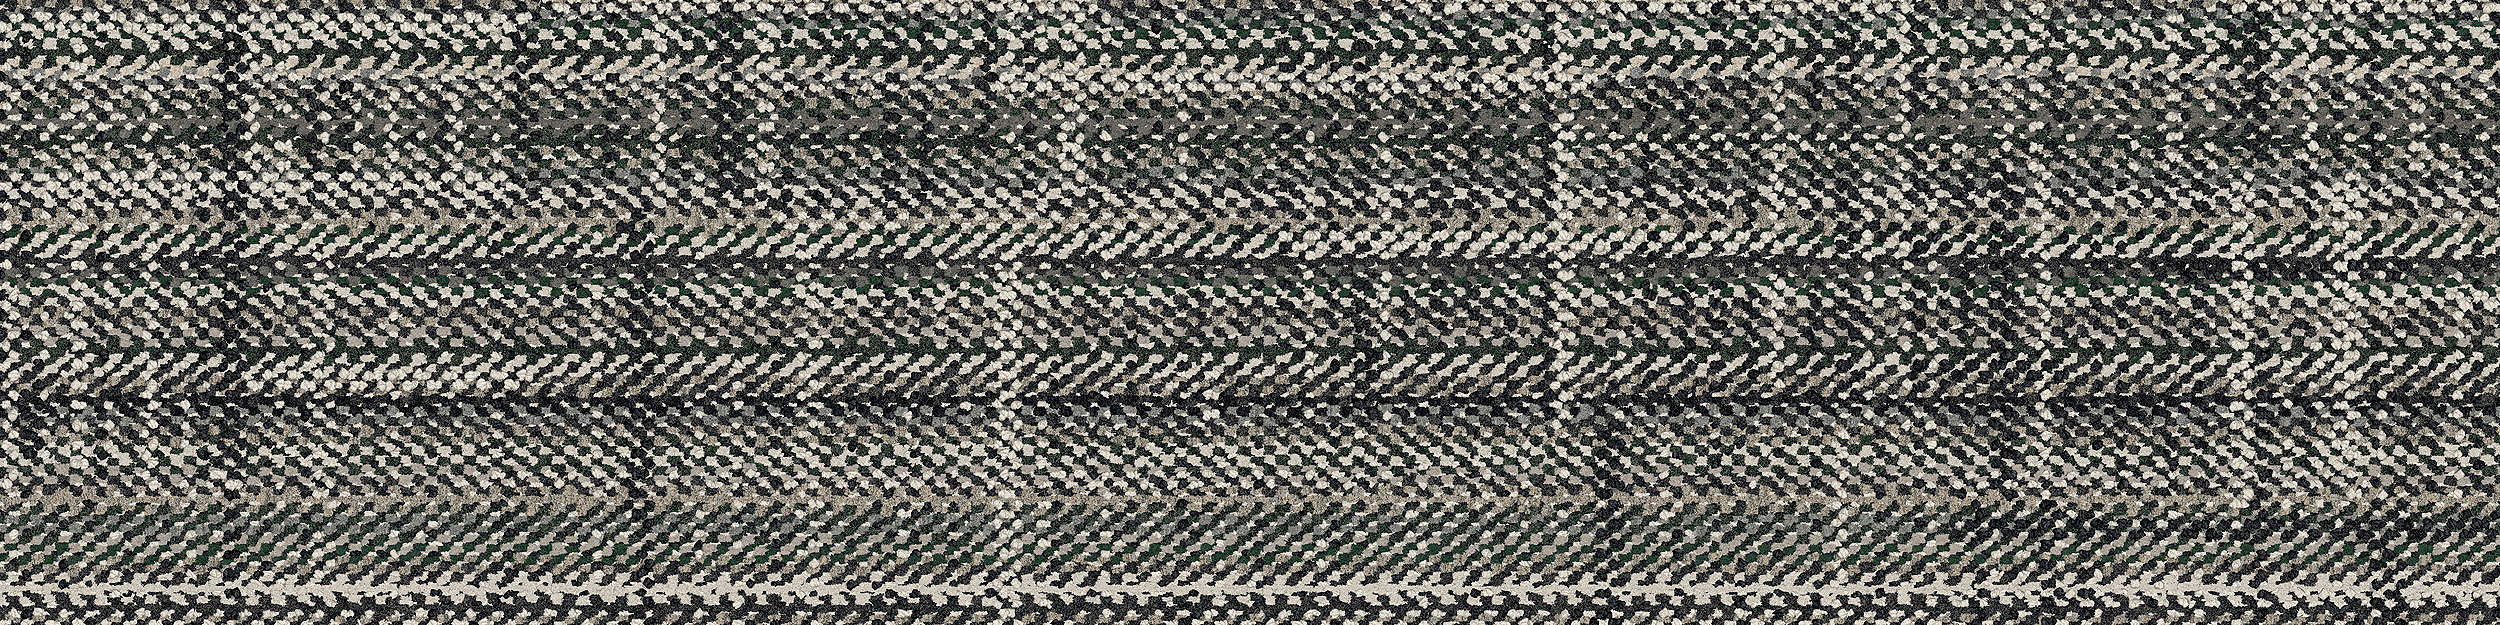 French Seams Carpet Tile In Compiegne imagen número 6